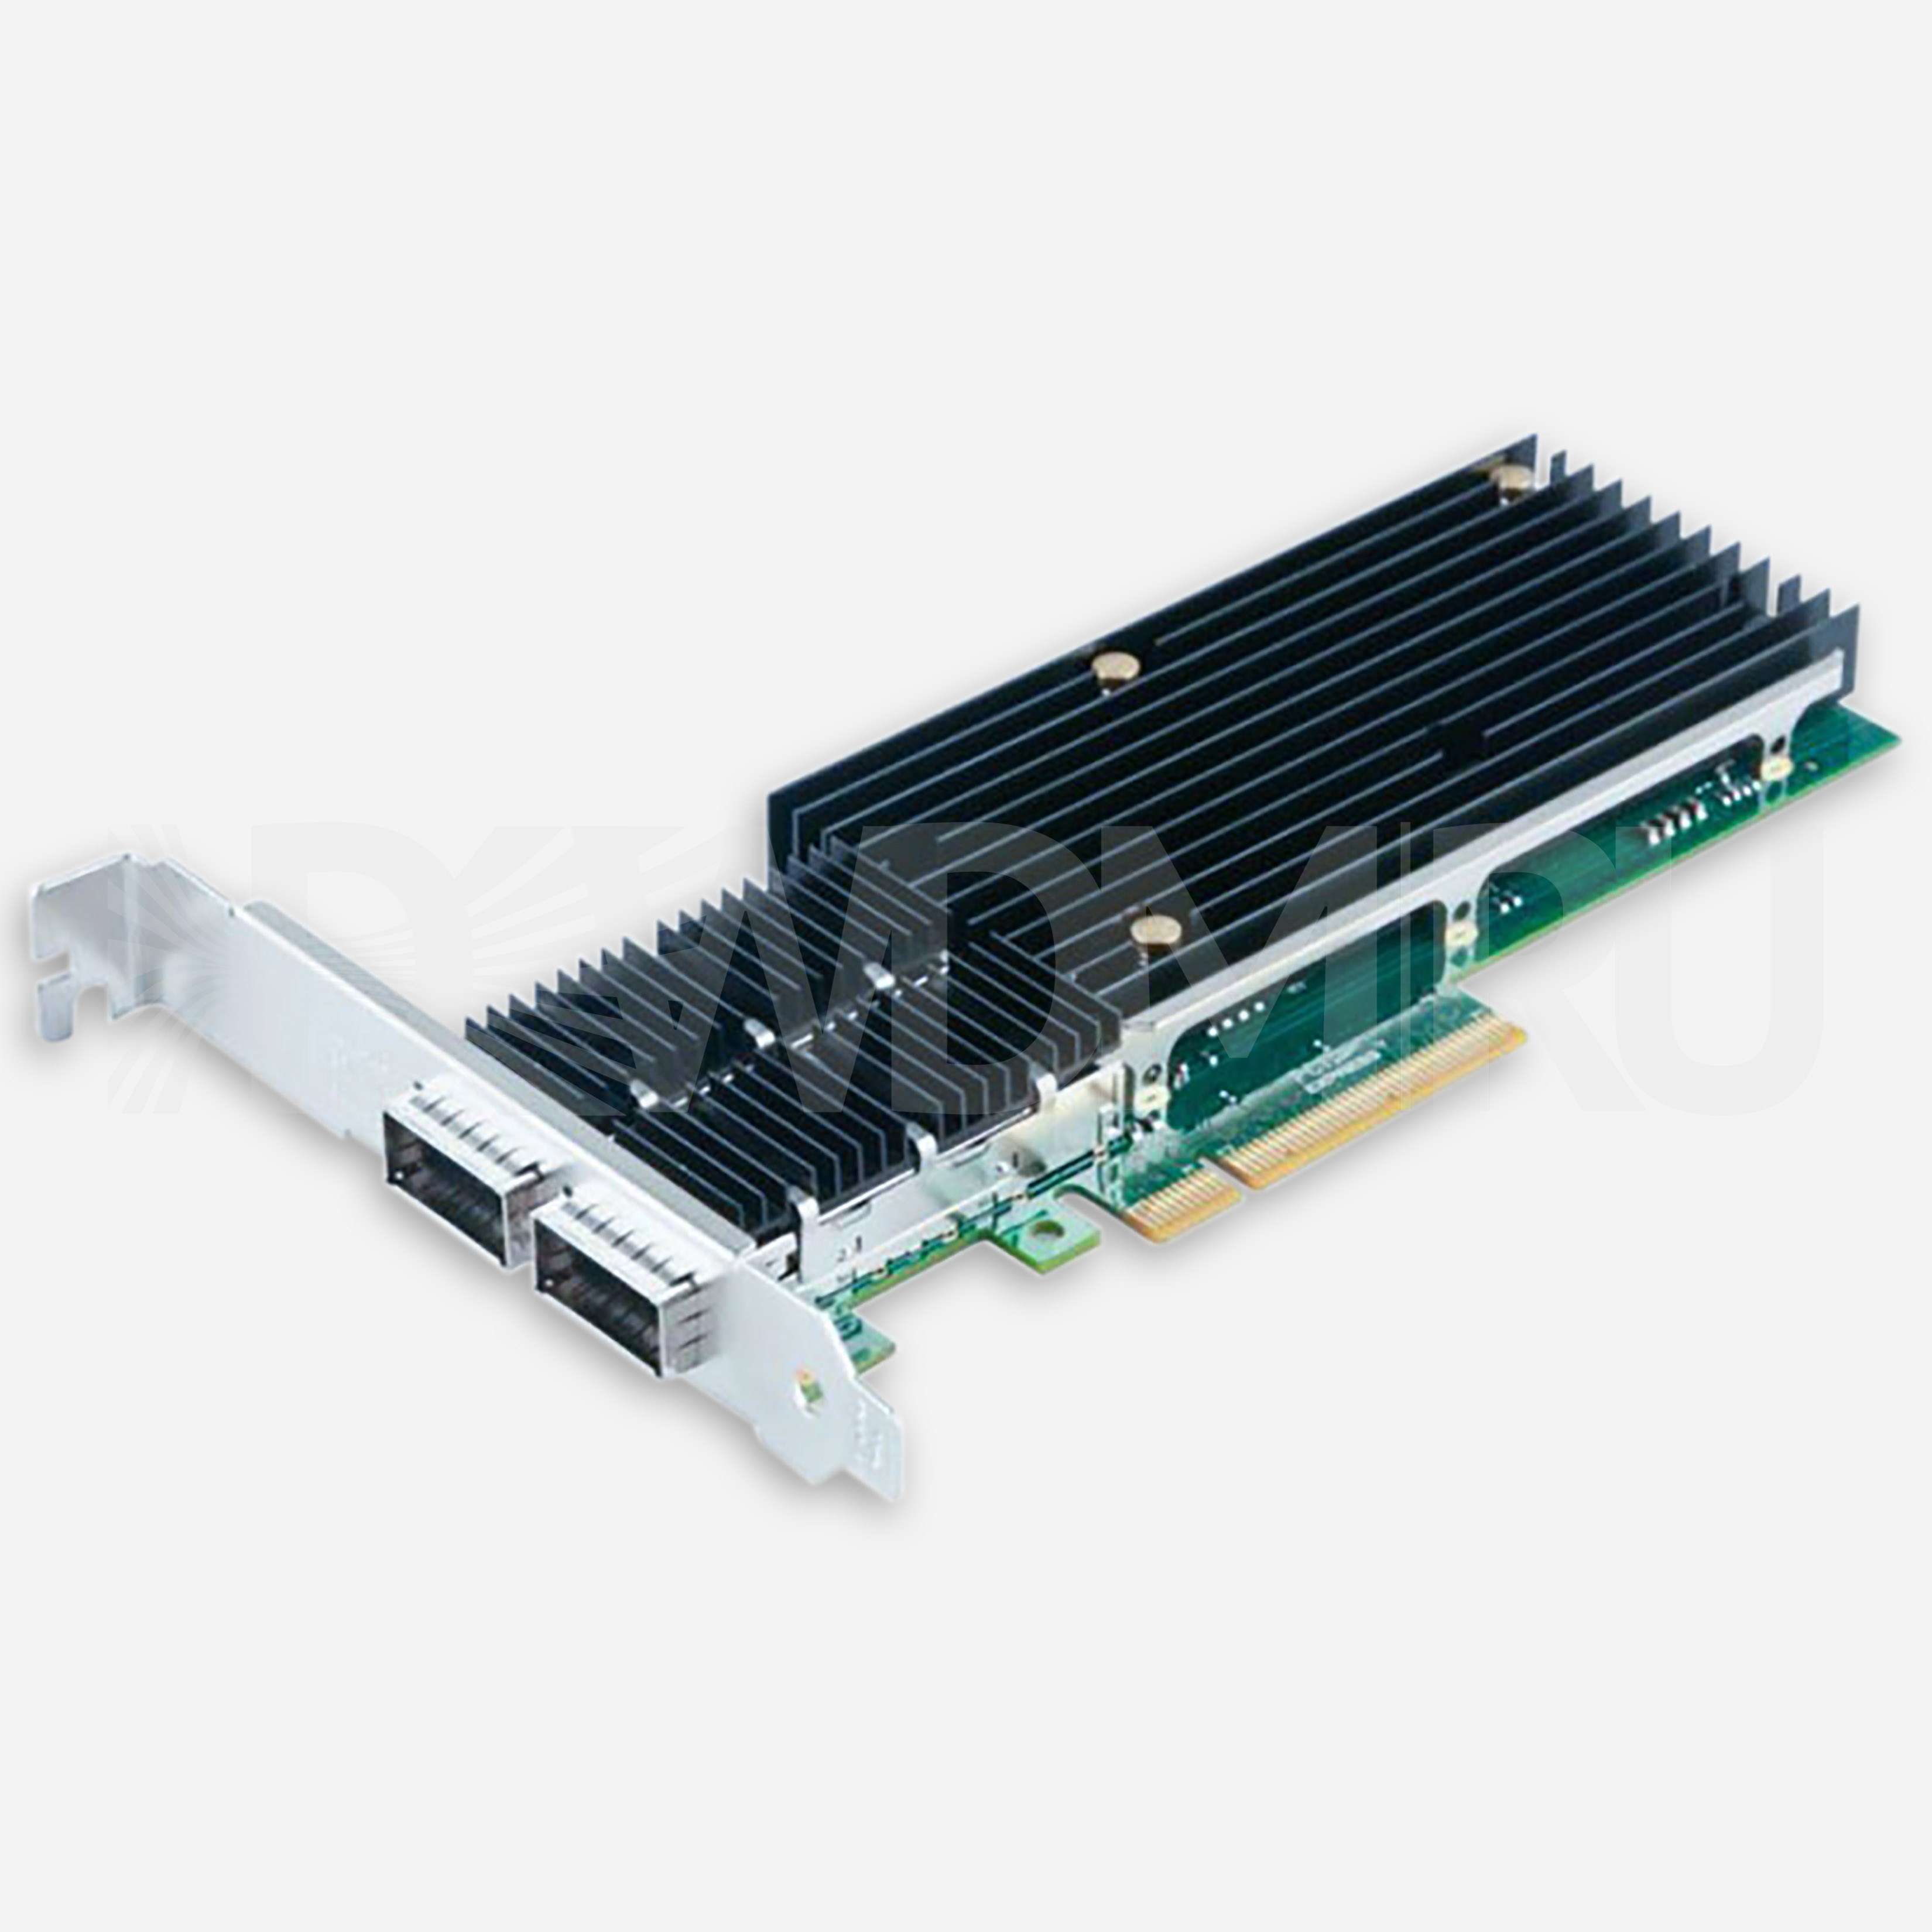 Сетевая карта 40 Gb/s (NIC), 2 порта QSFP, Intel XL710-BM2 Controller, PCIe 3.0 X8 - ДВДМ.РУ (DSO-N-40G2Q-XL710-X30-8)